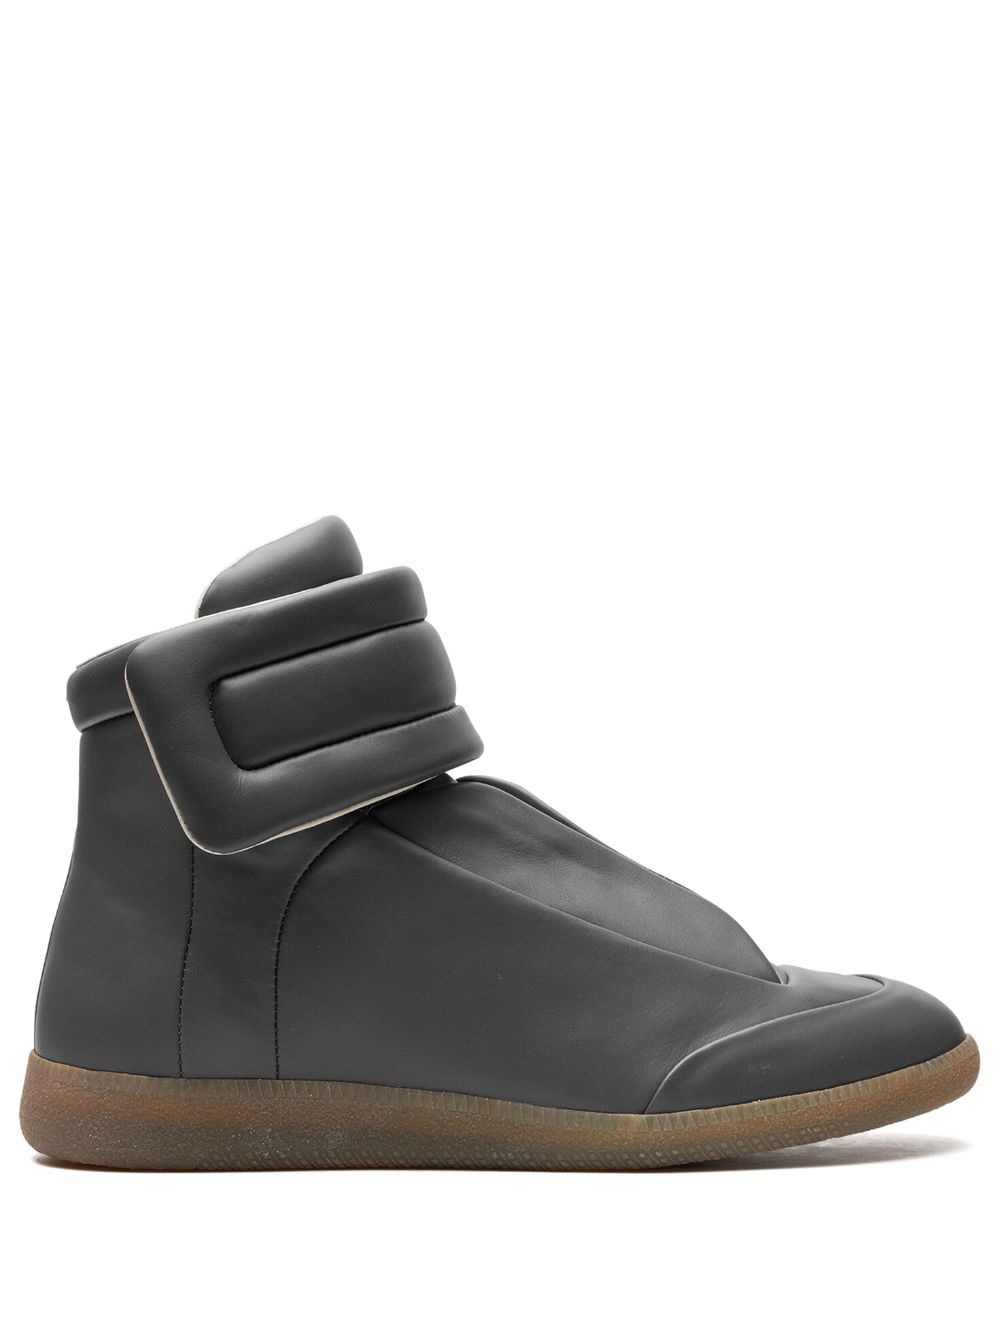 Maison Margiela Future High "black/gum" Sneakers In Grey